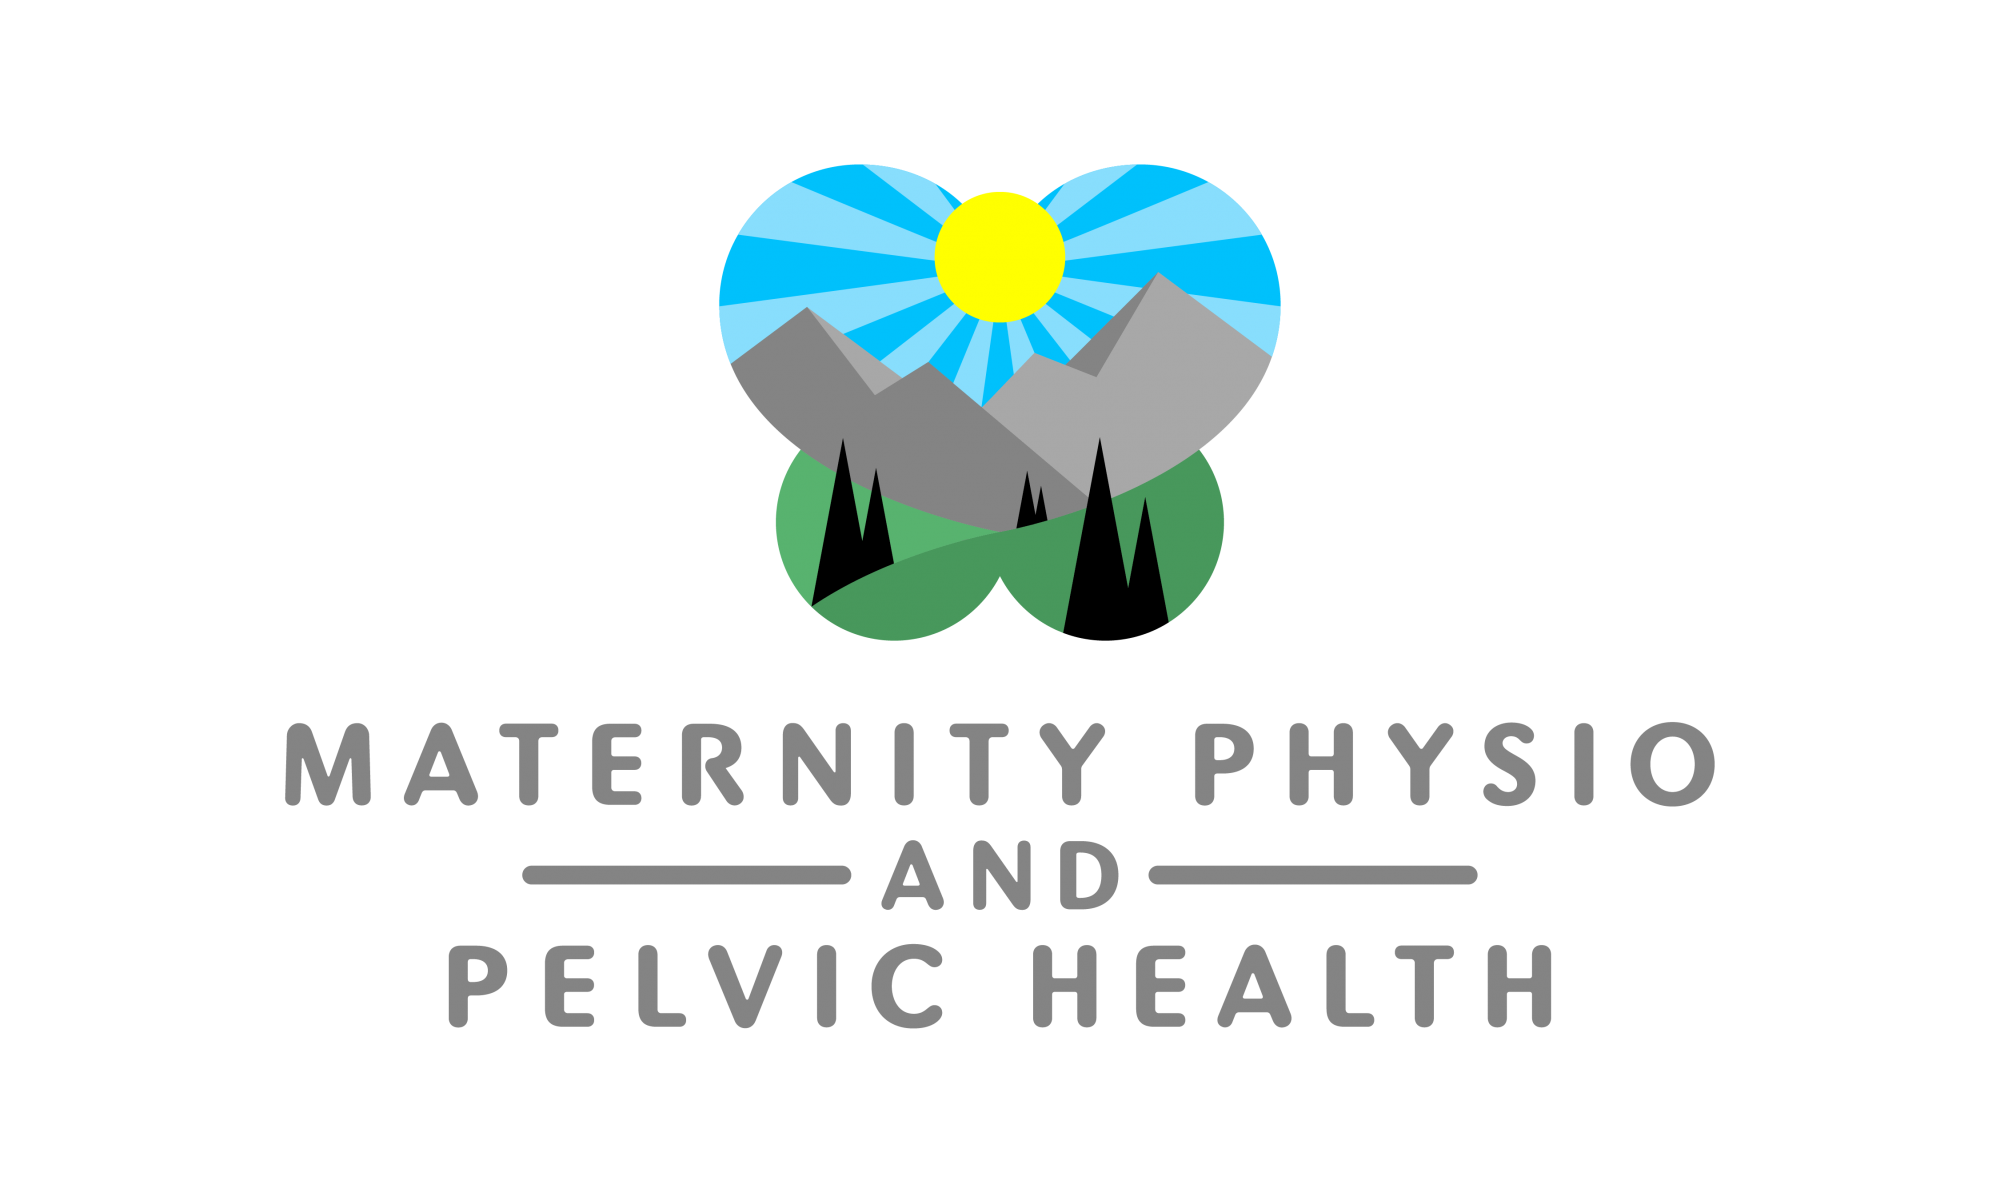 Maternity Physio and Pelvic Health